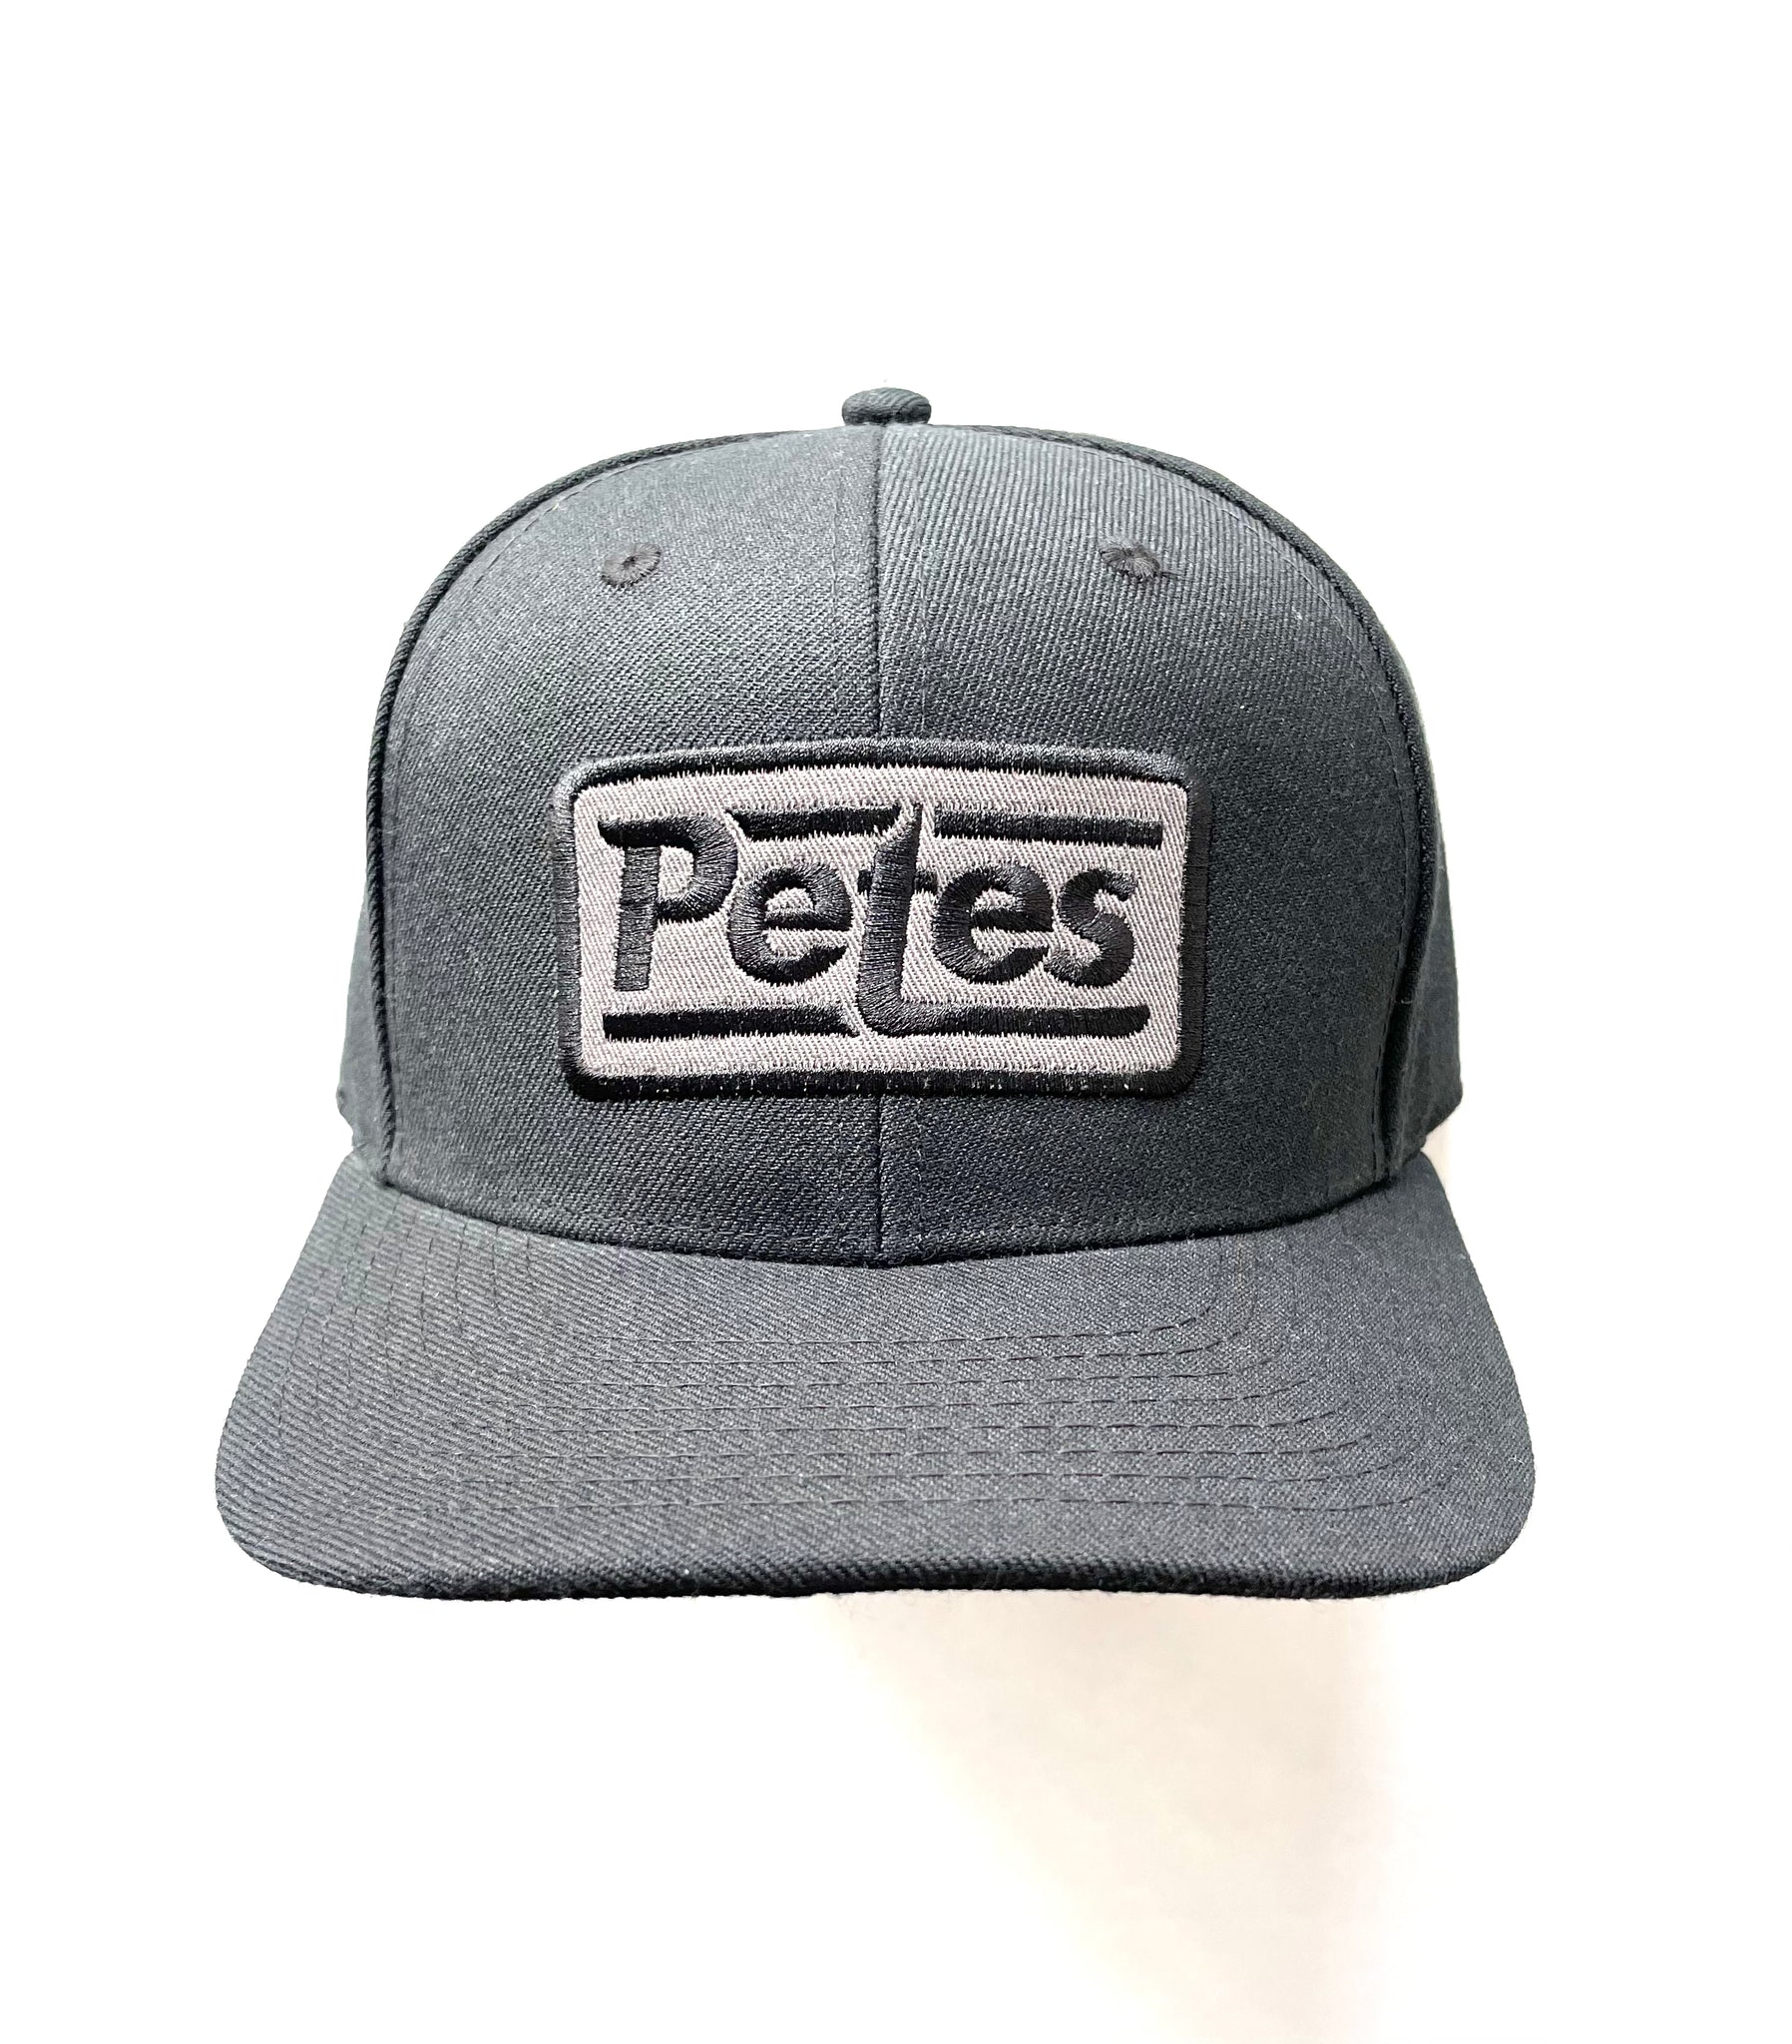 PTBO - Petes 5 Panel Hat